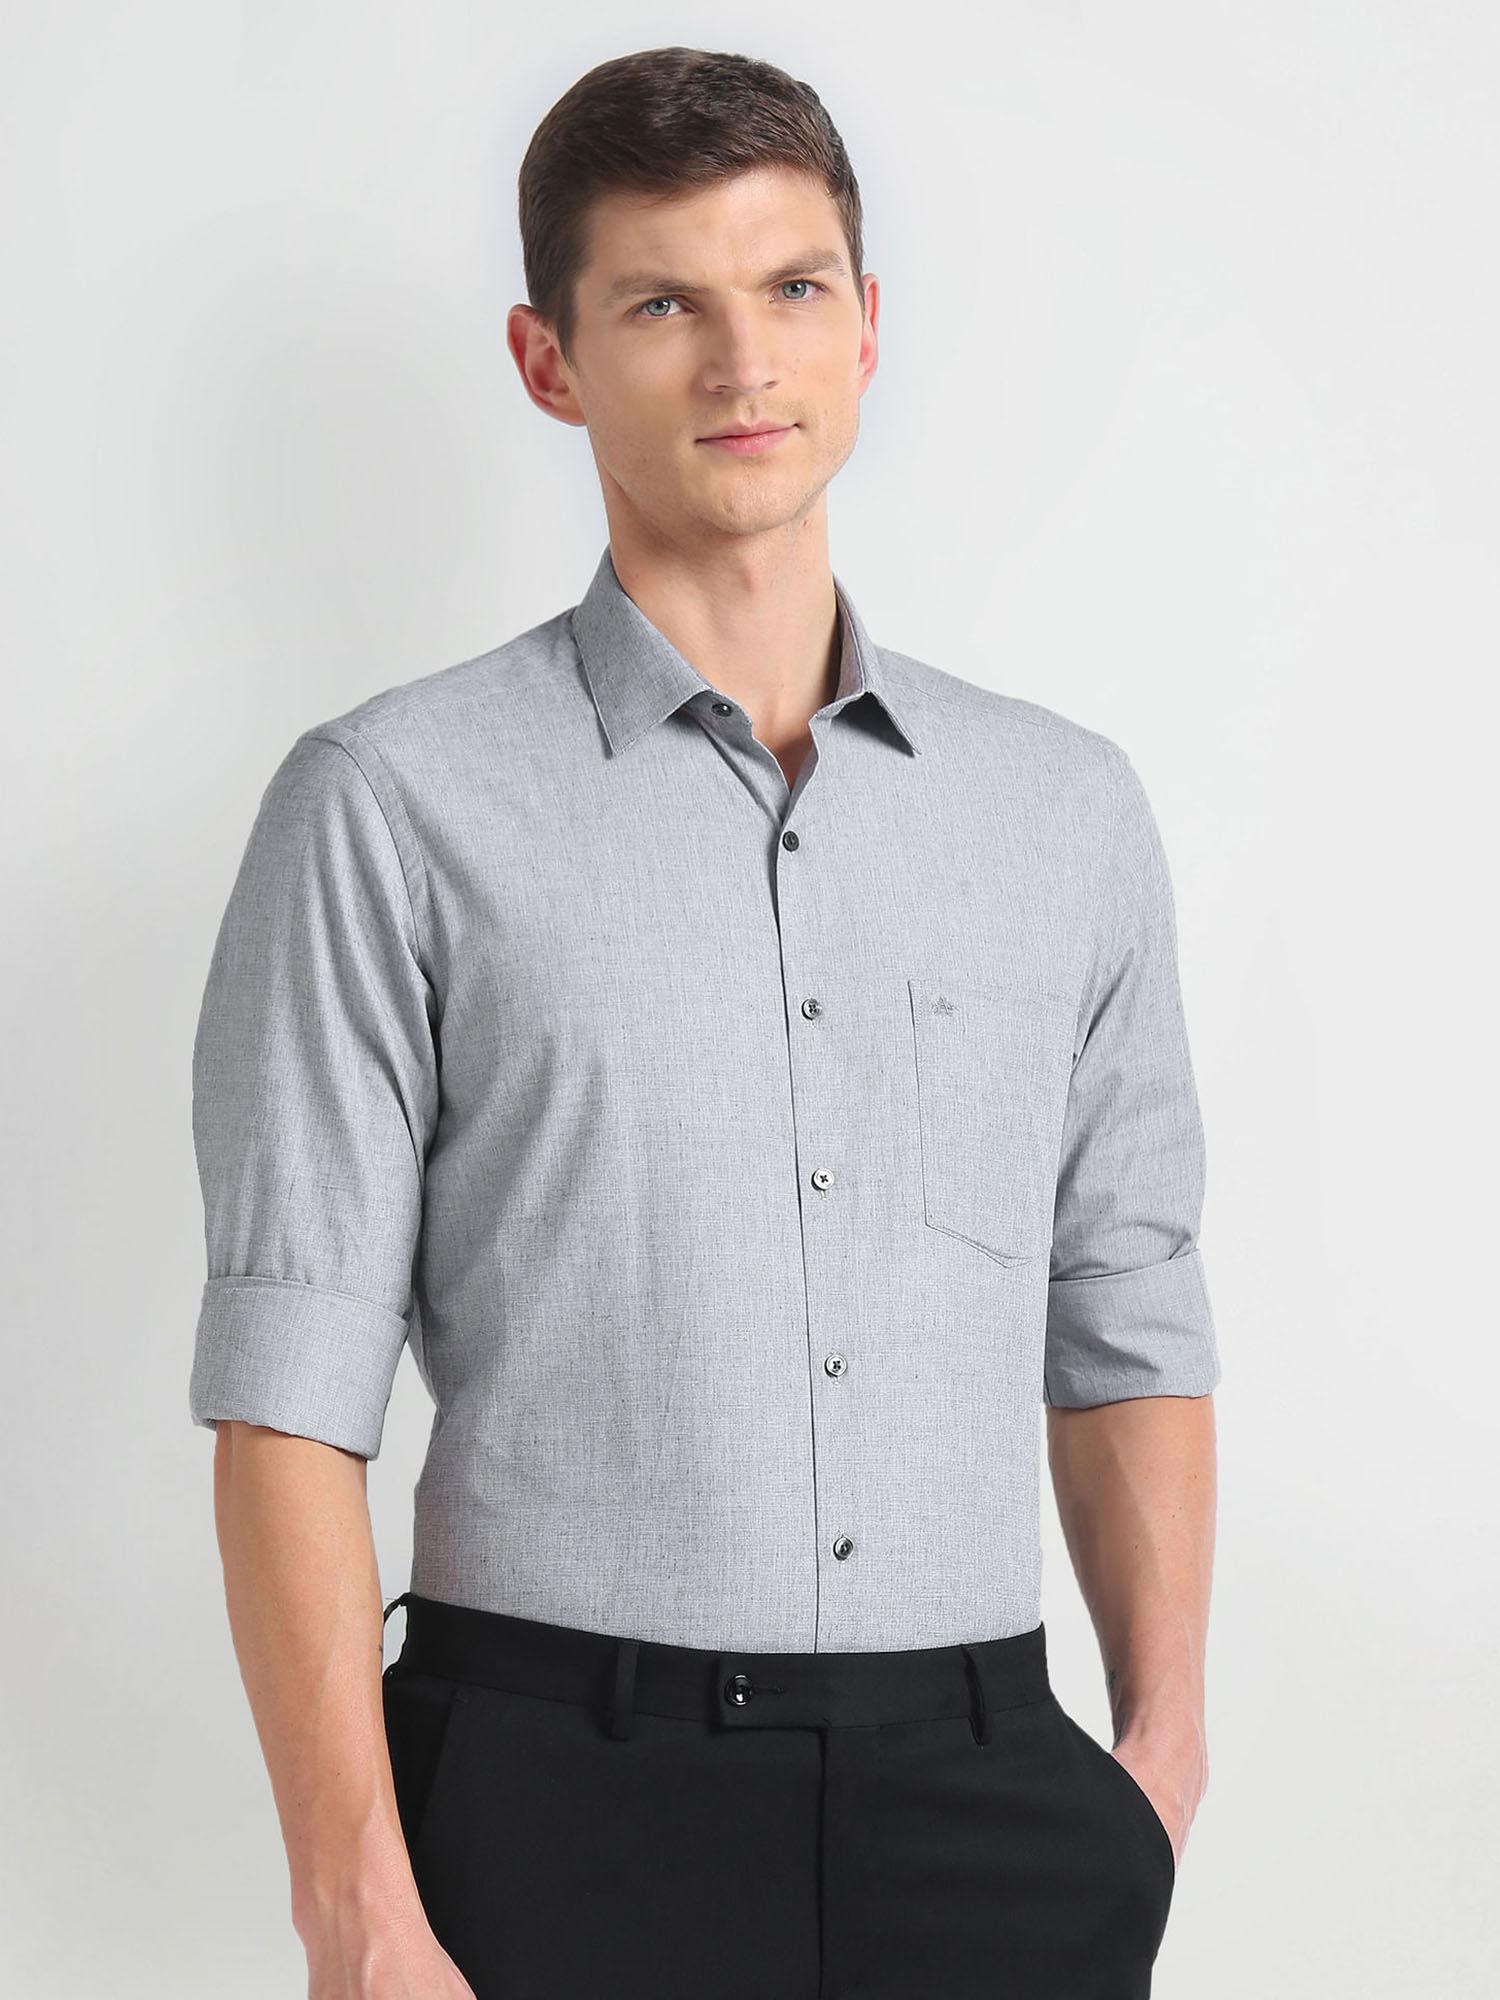 grey pure cotton heathered formal shirt